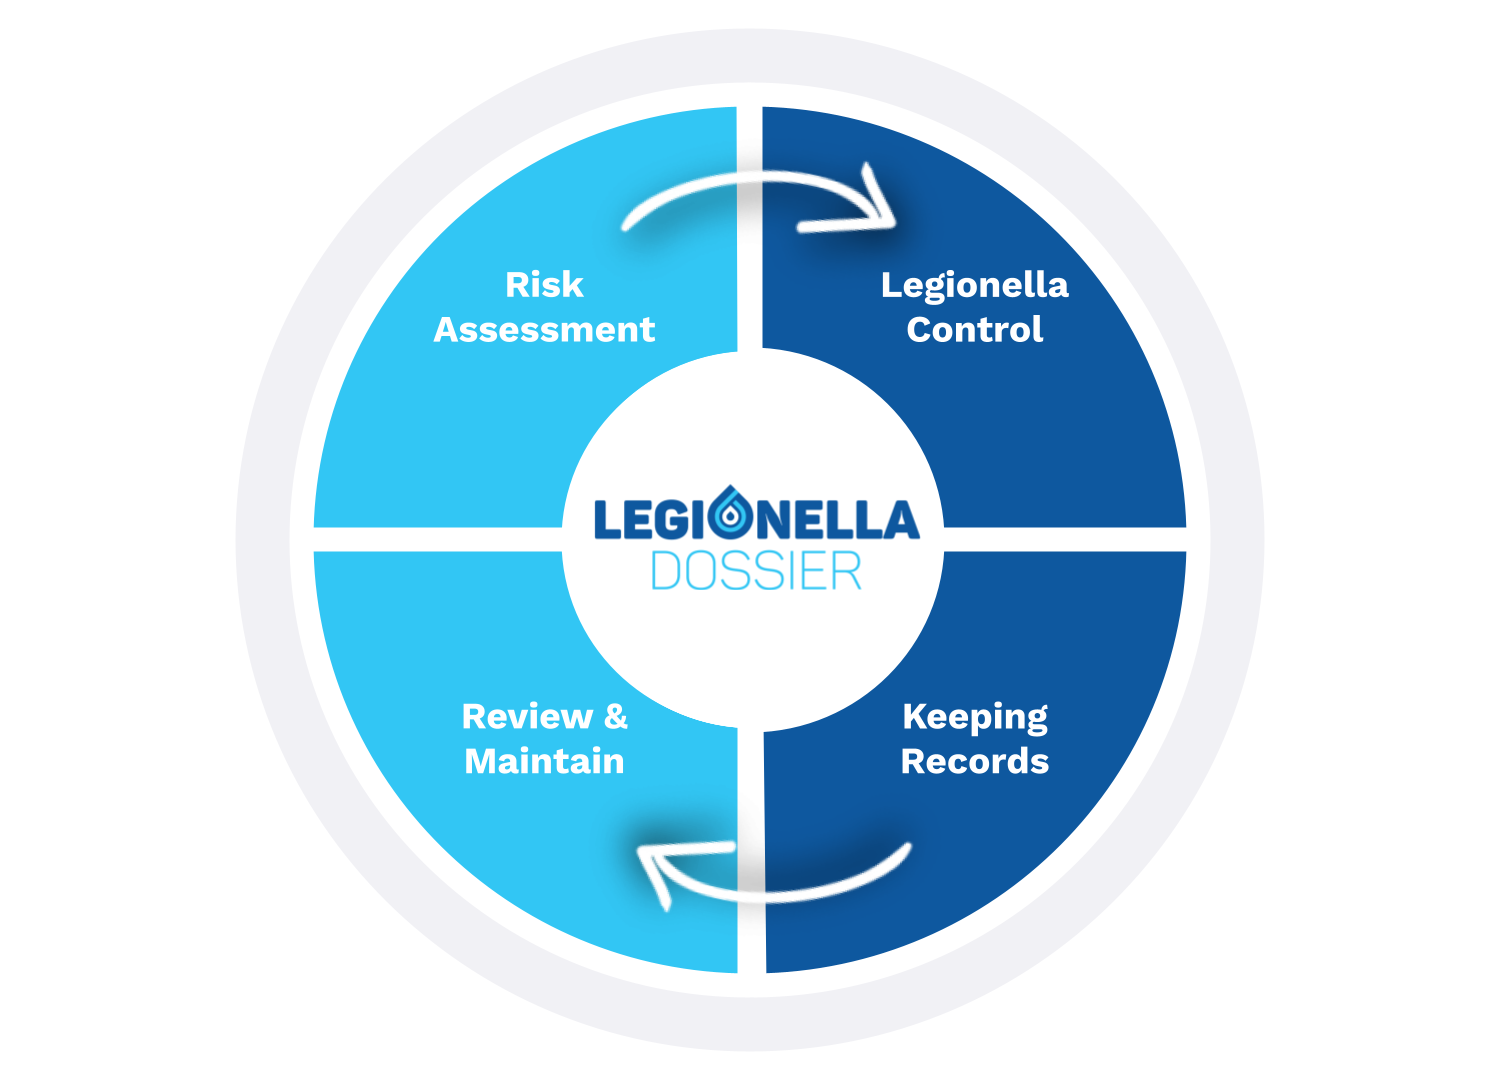 Connected Assessment & Control legionelladossier